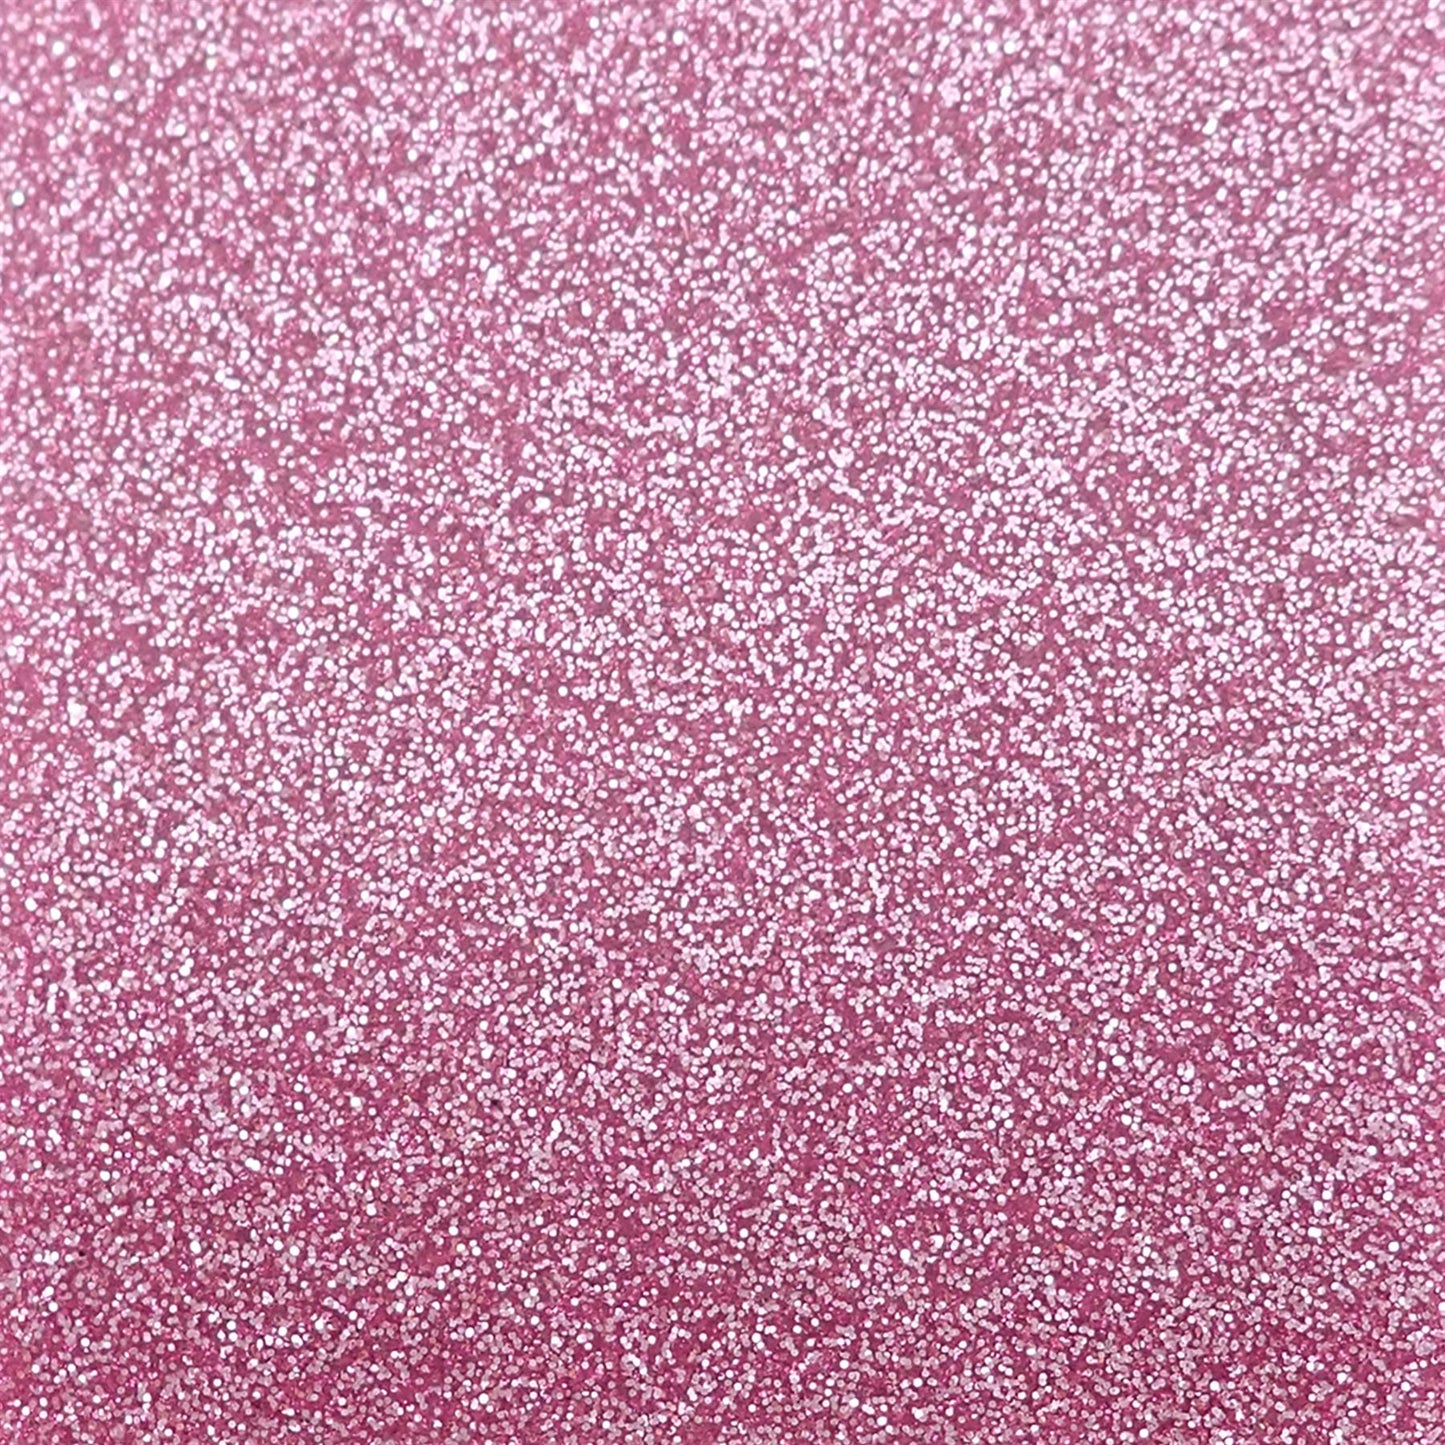 Incudo Pink 2-Sided Glitter Acrylic Sheet - 400x300x3mm (15.7x11.81x0.12")